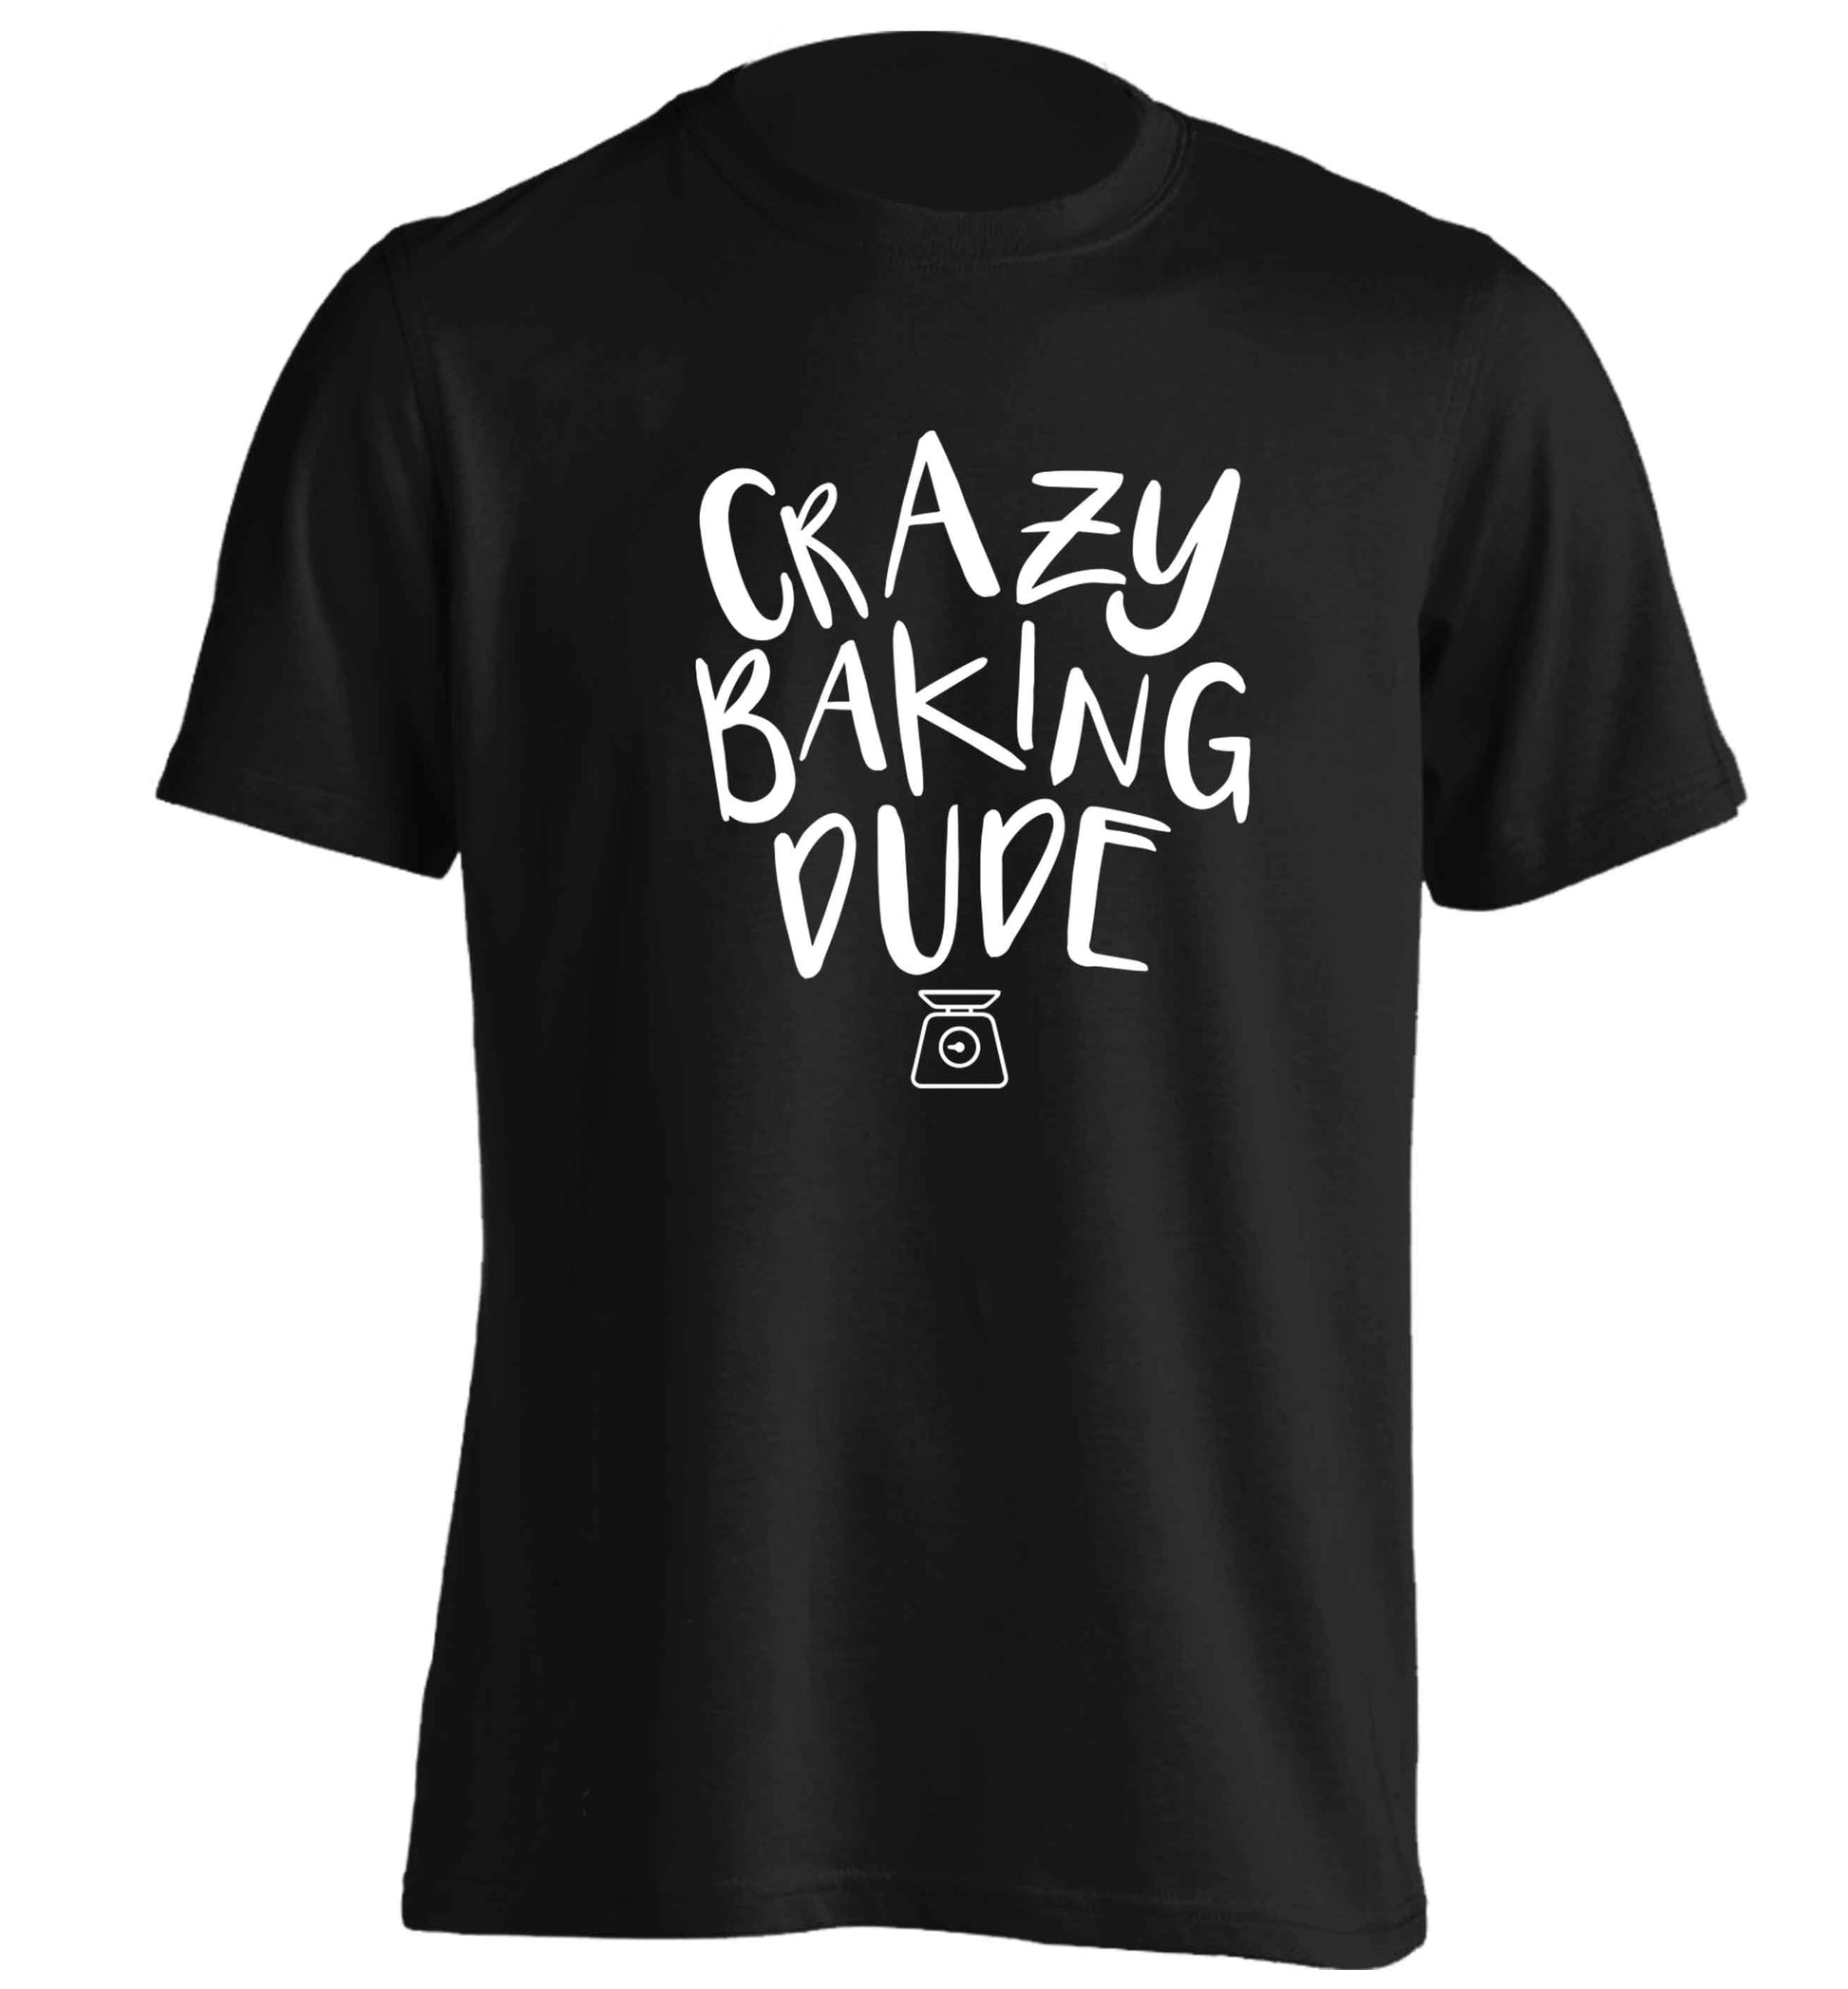 Crazy baking dude adults unisex black Tshirt 2XL